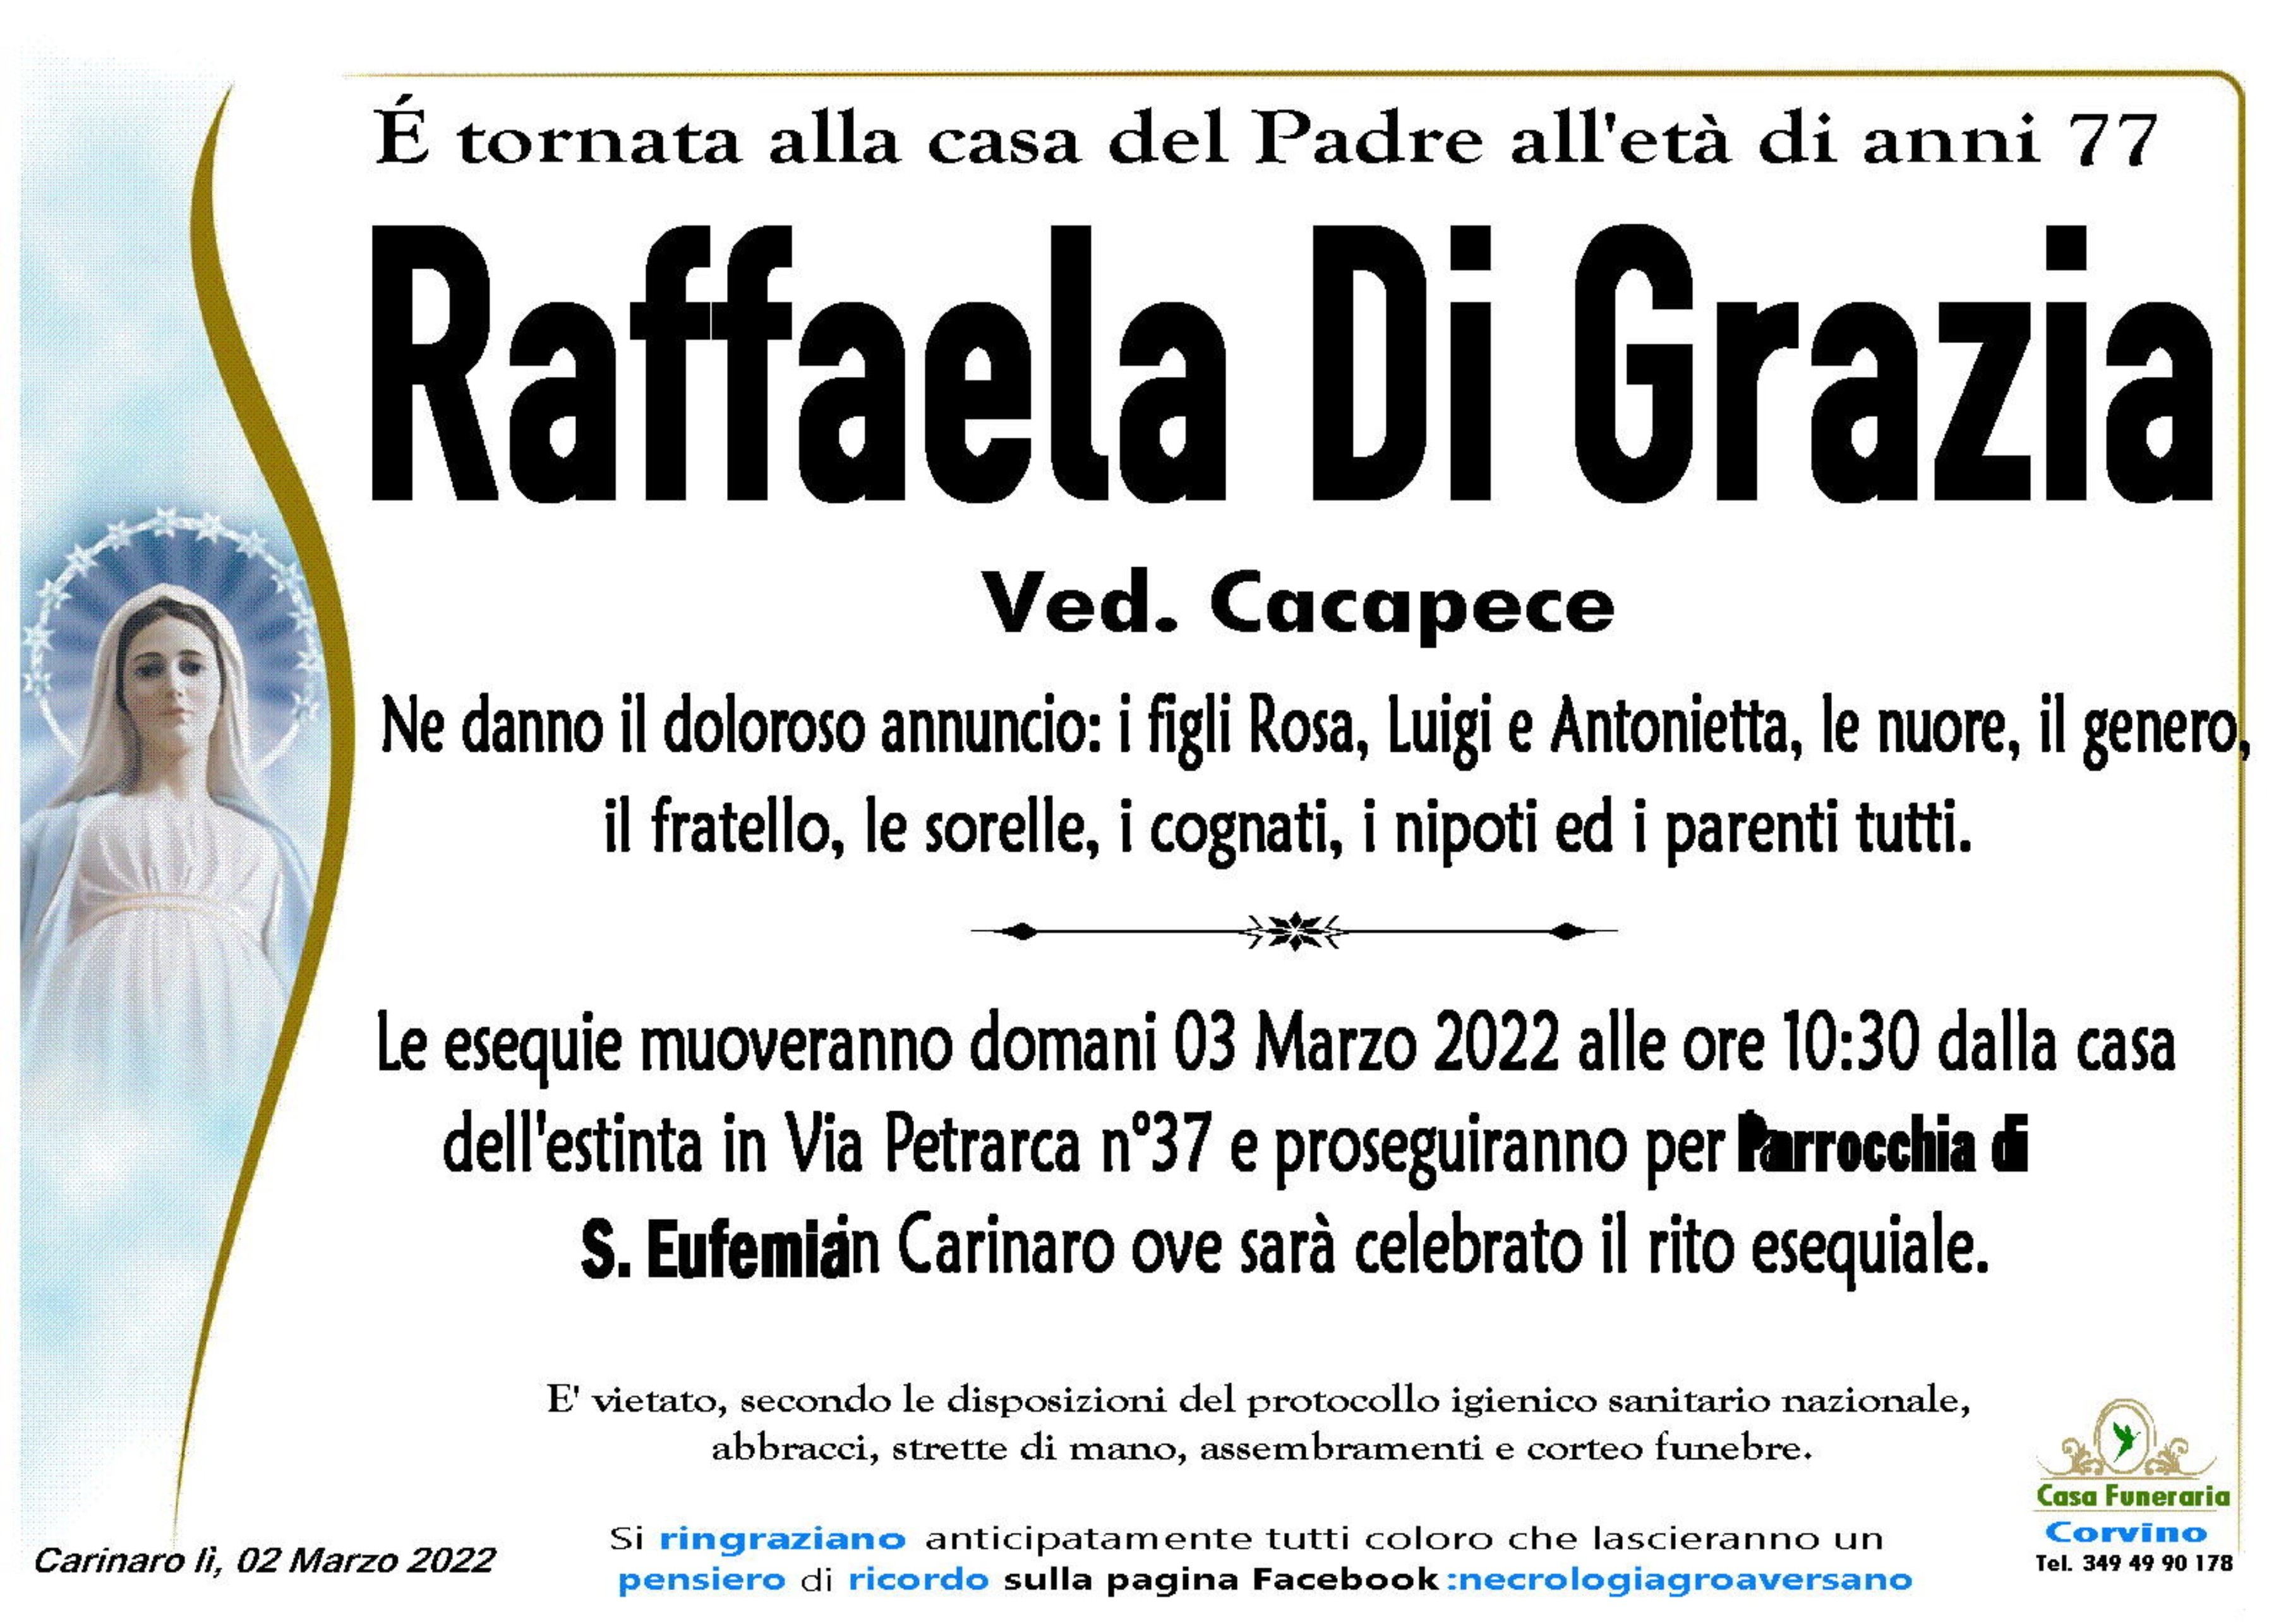 Raffaela Di Grazia